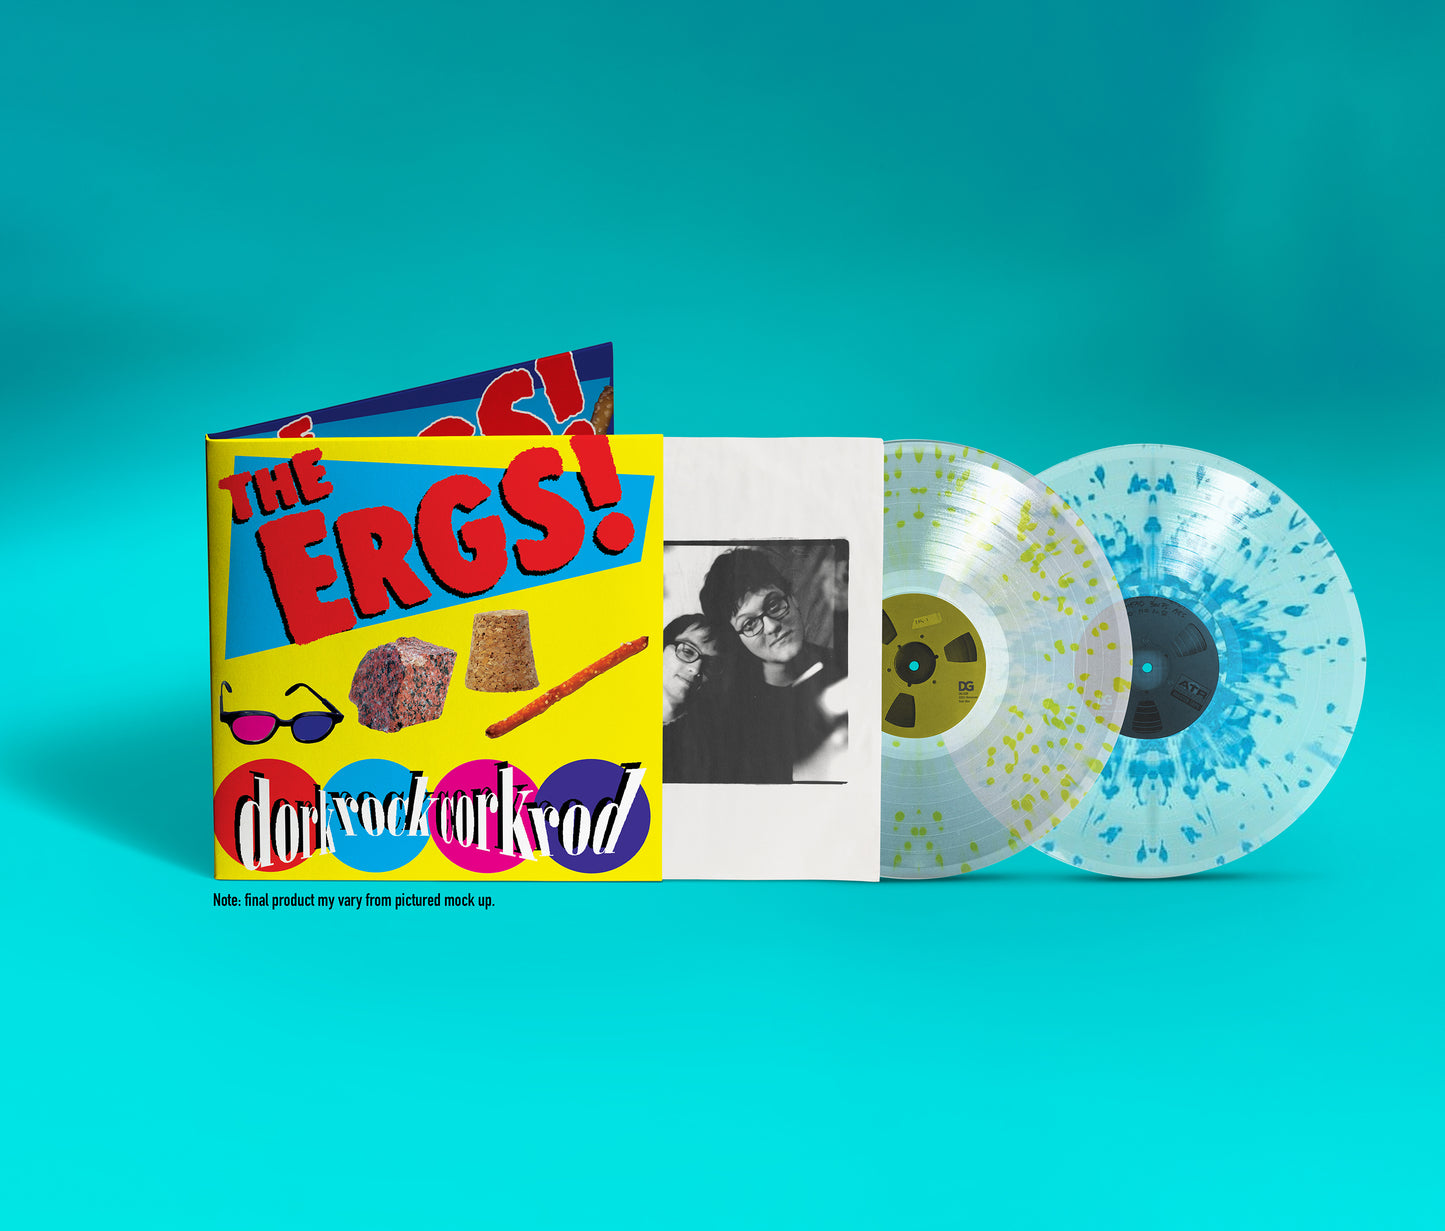 PRE-ORDER: The Ergs! "dorkrockcorkrod (Deluxe Edition)" 2xLP (Blue & Yellow)